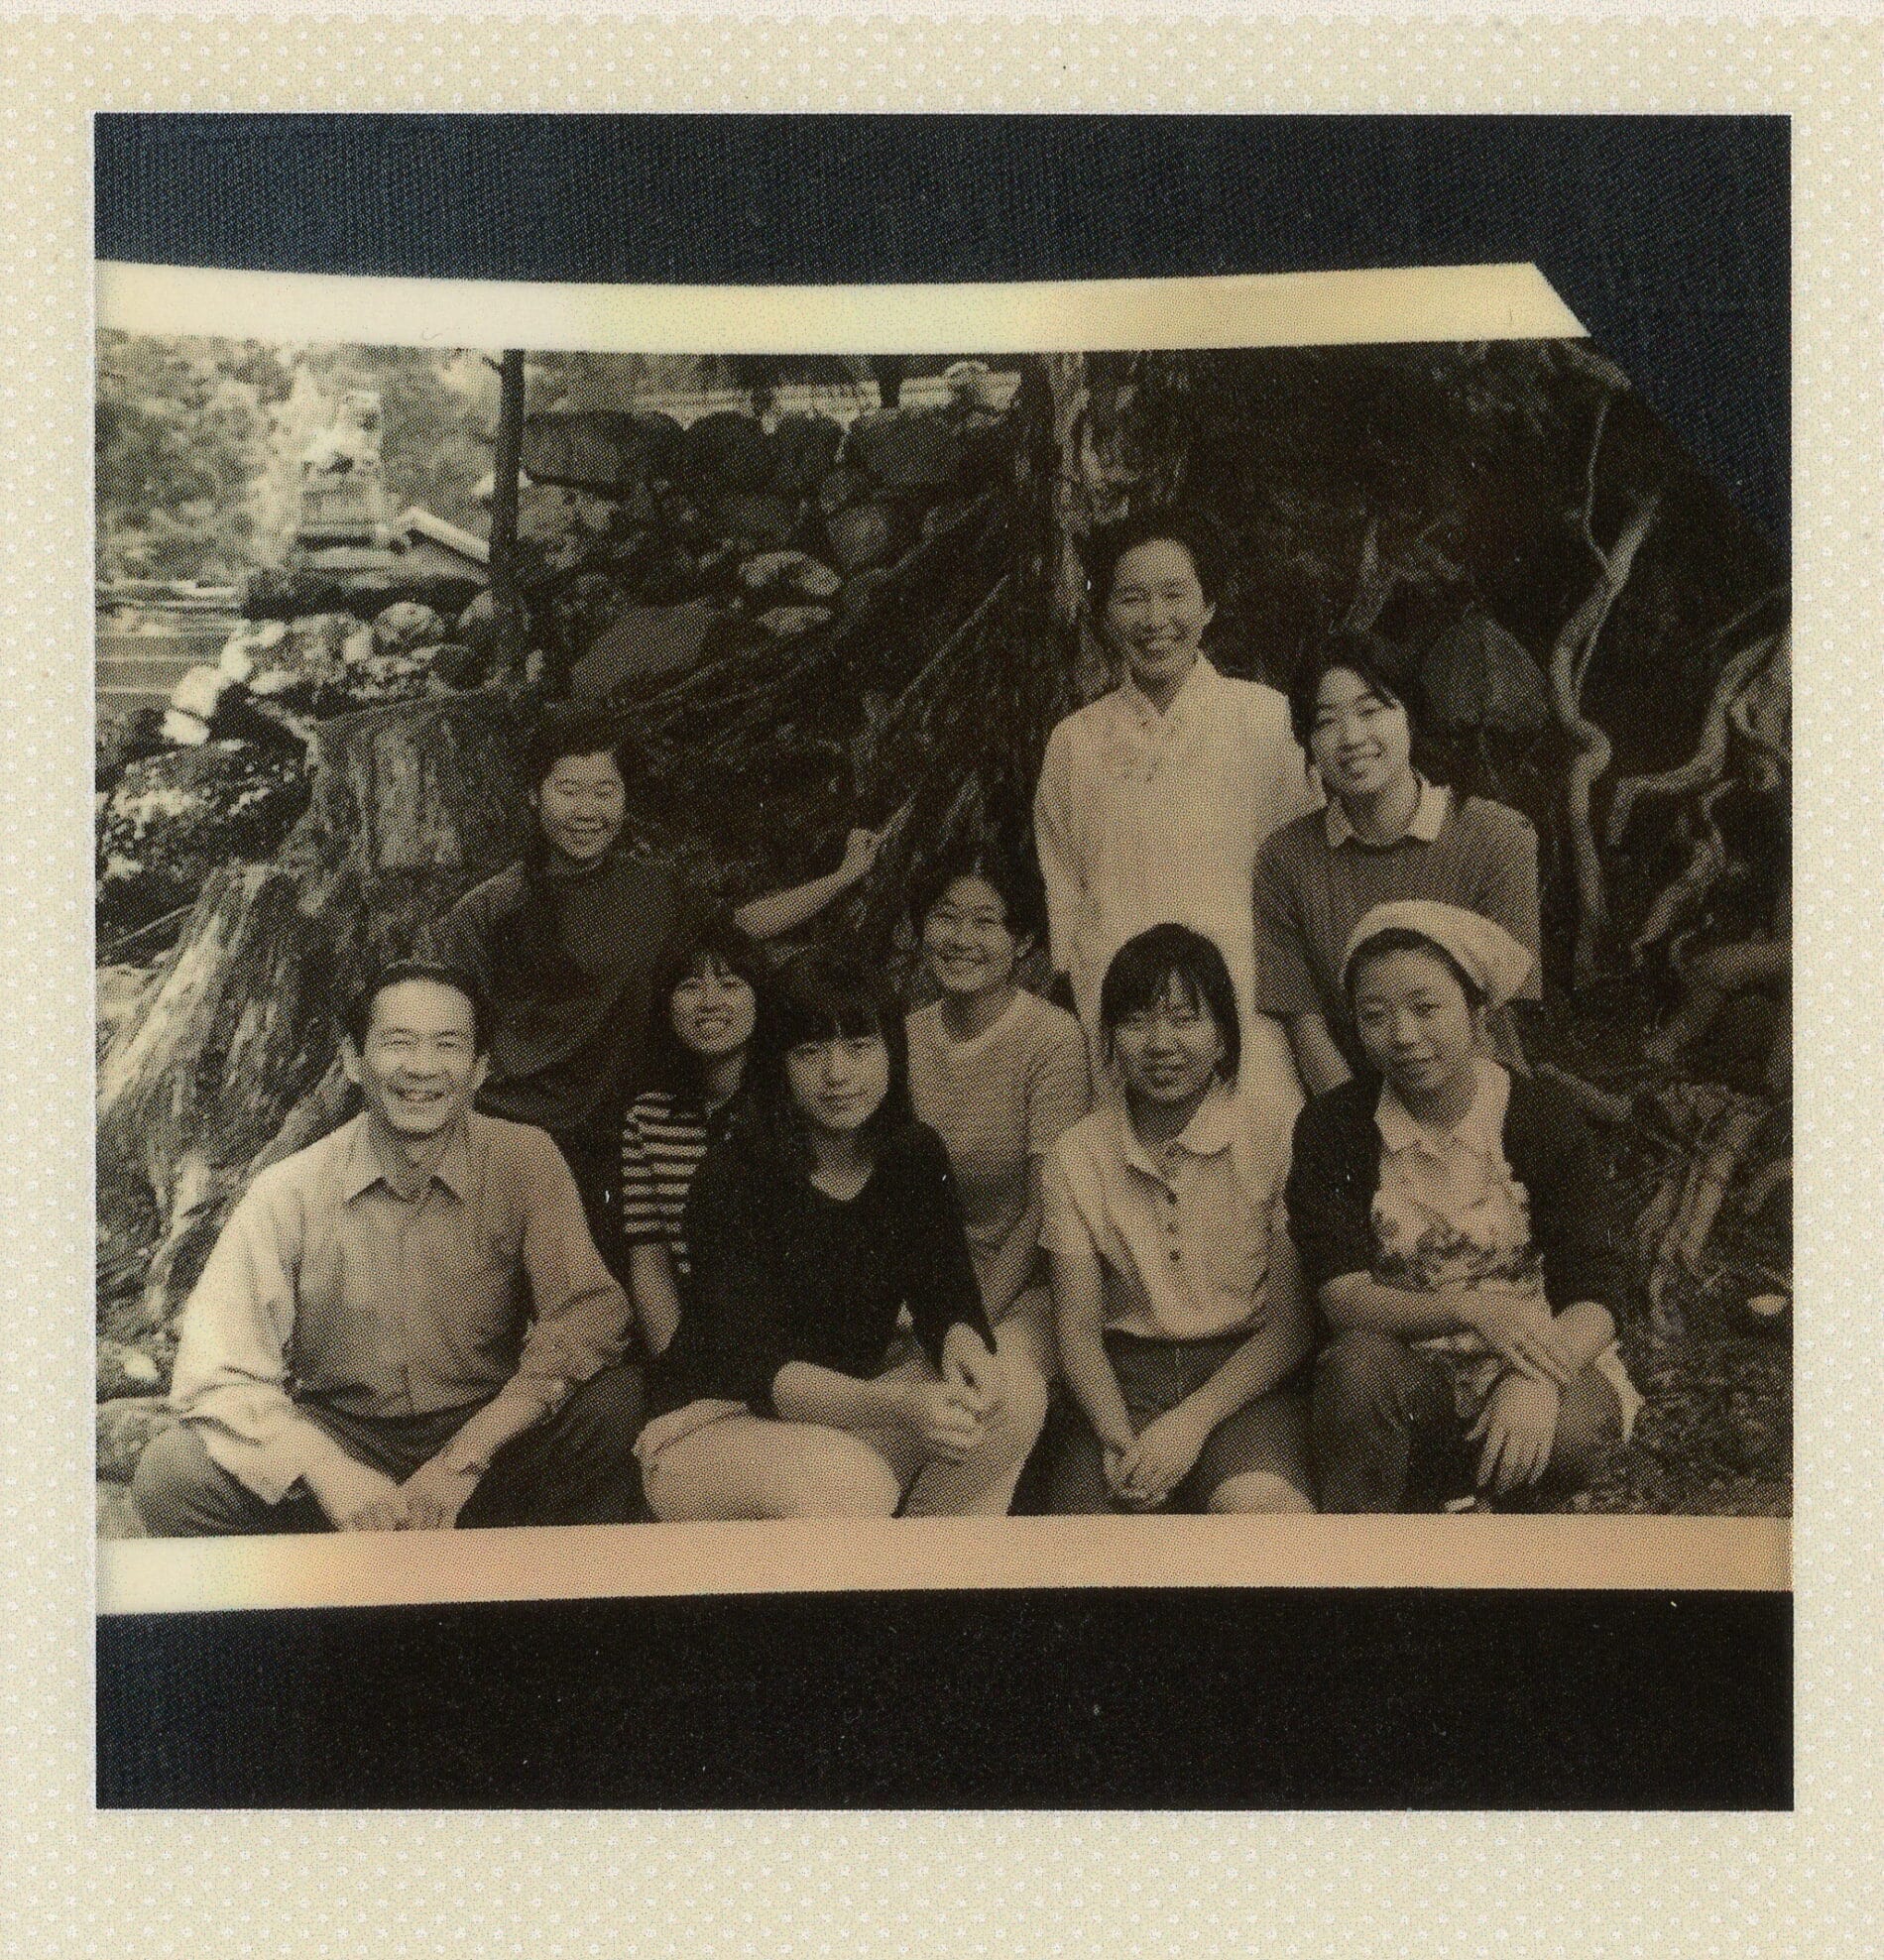 Rikizo, his wife Tokiko and the apprentices